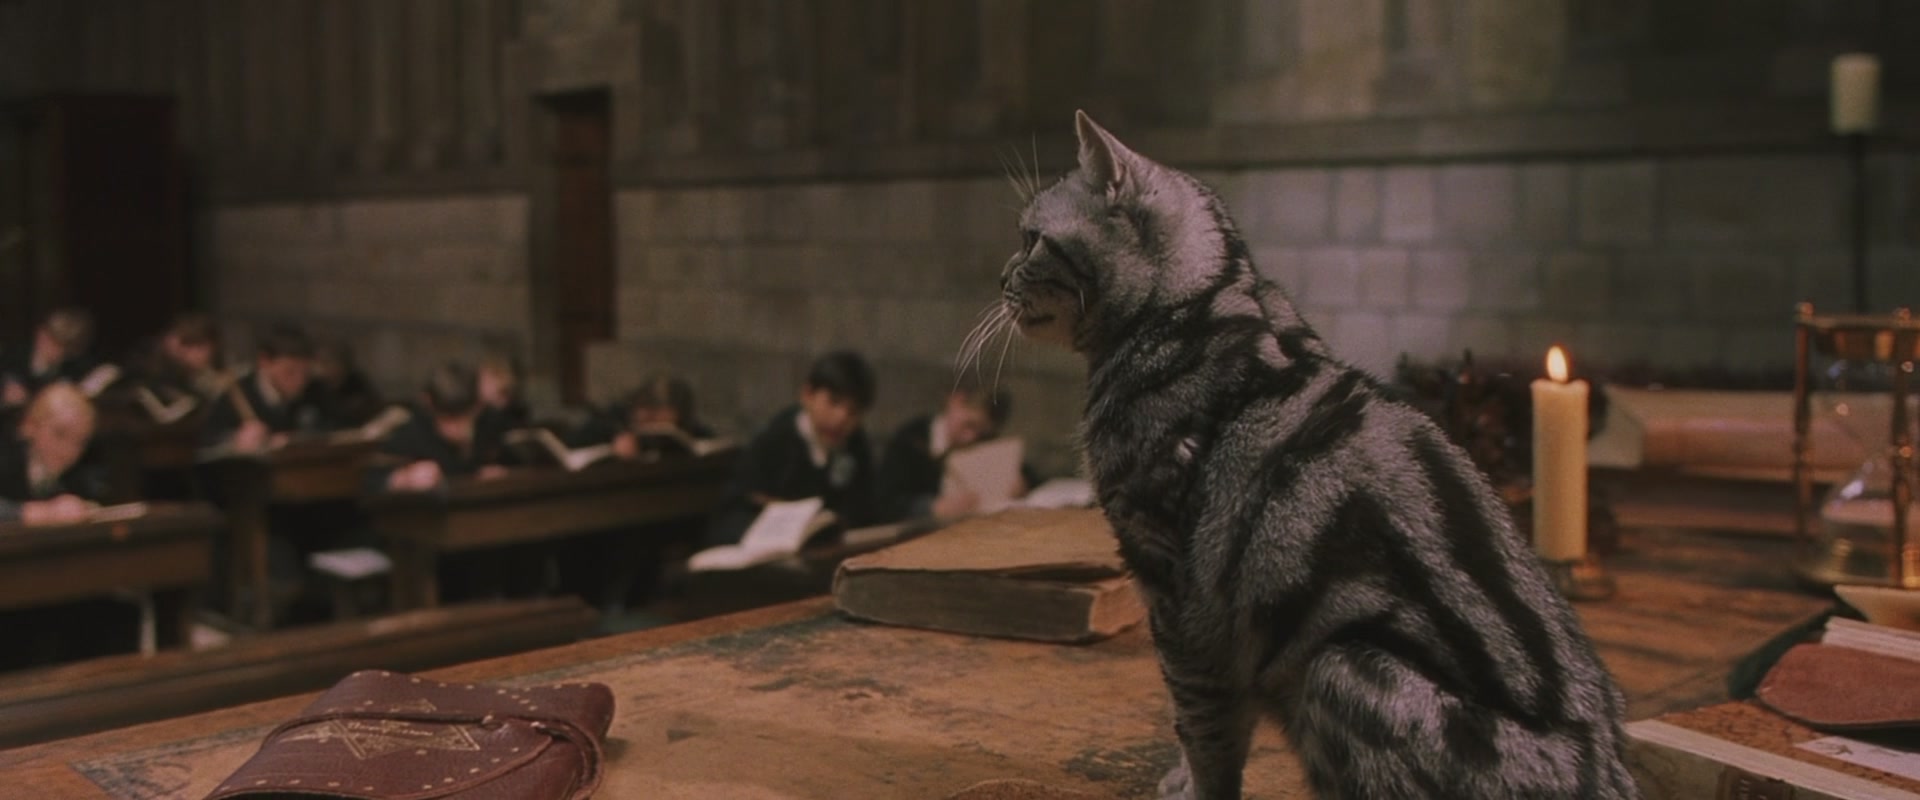 Профессор Макгонагалл из Гарри Поттера кошка